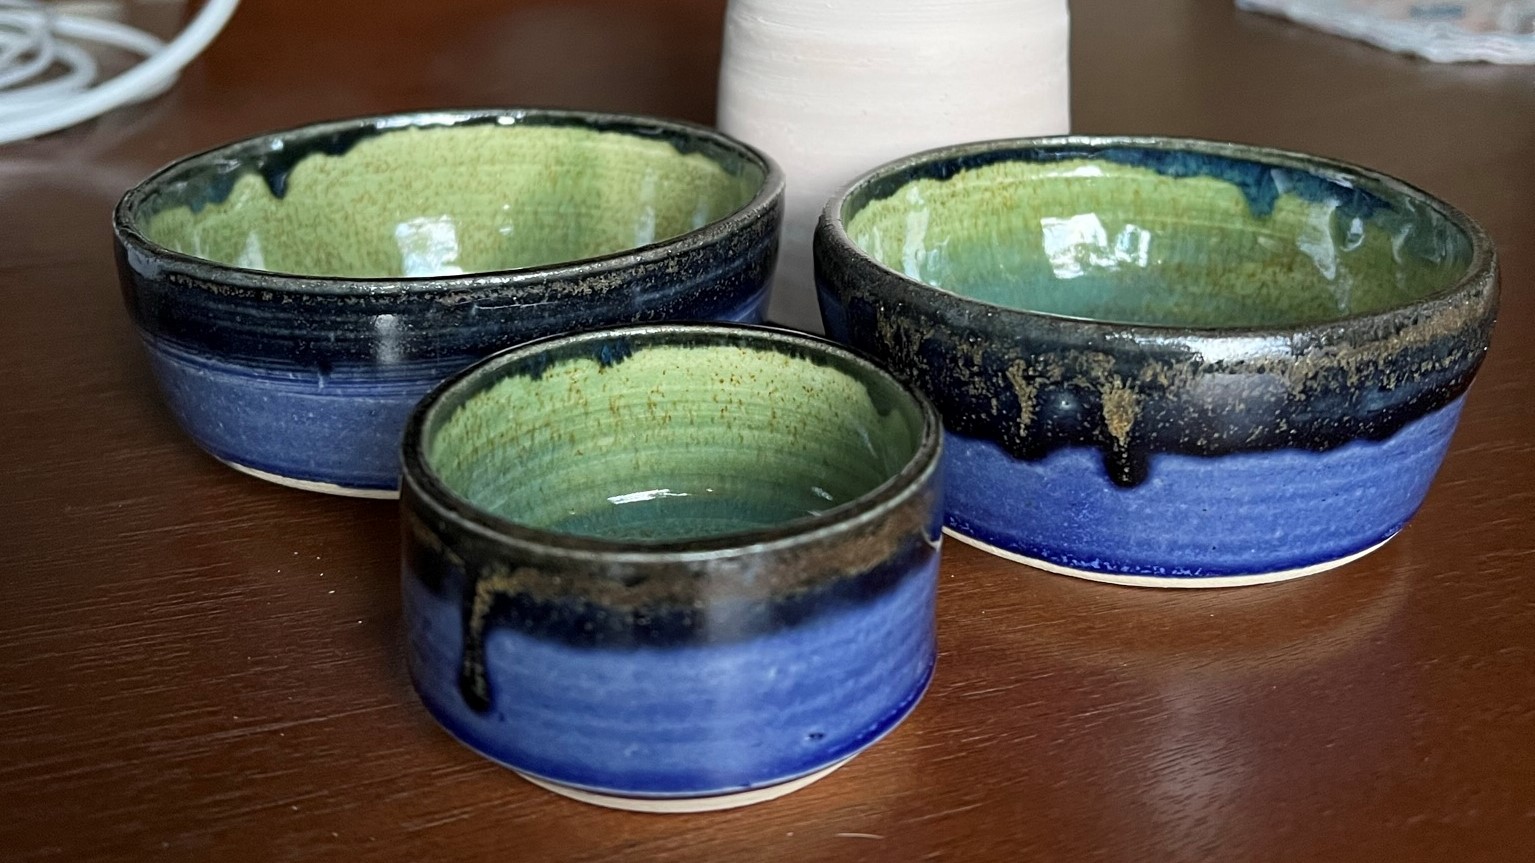 Three bowls of varying sizes